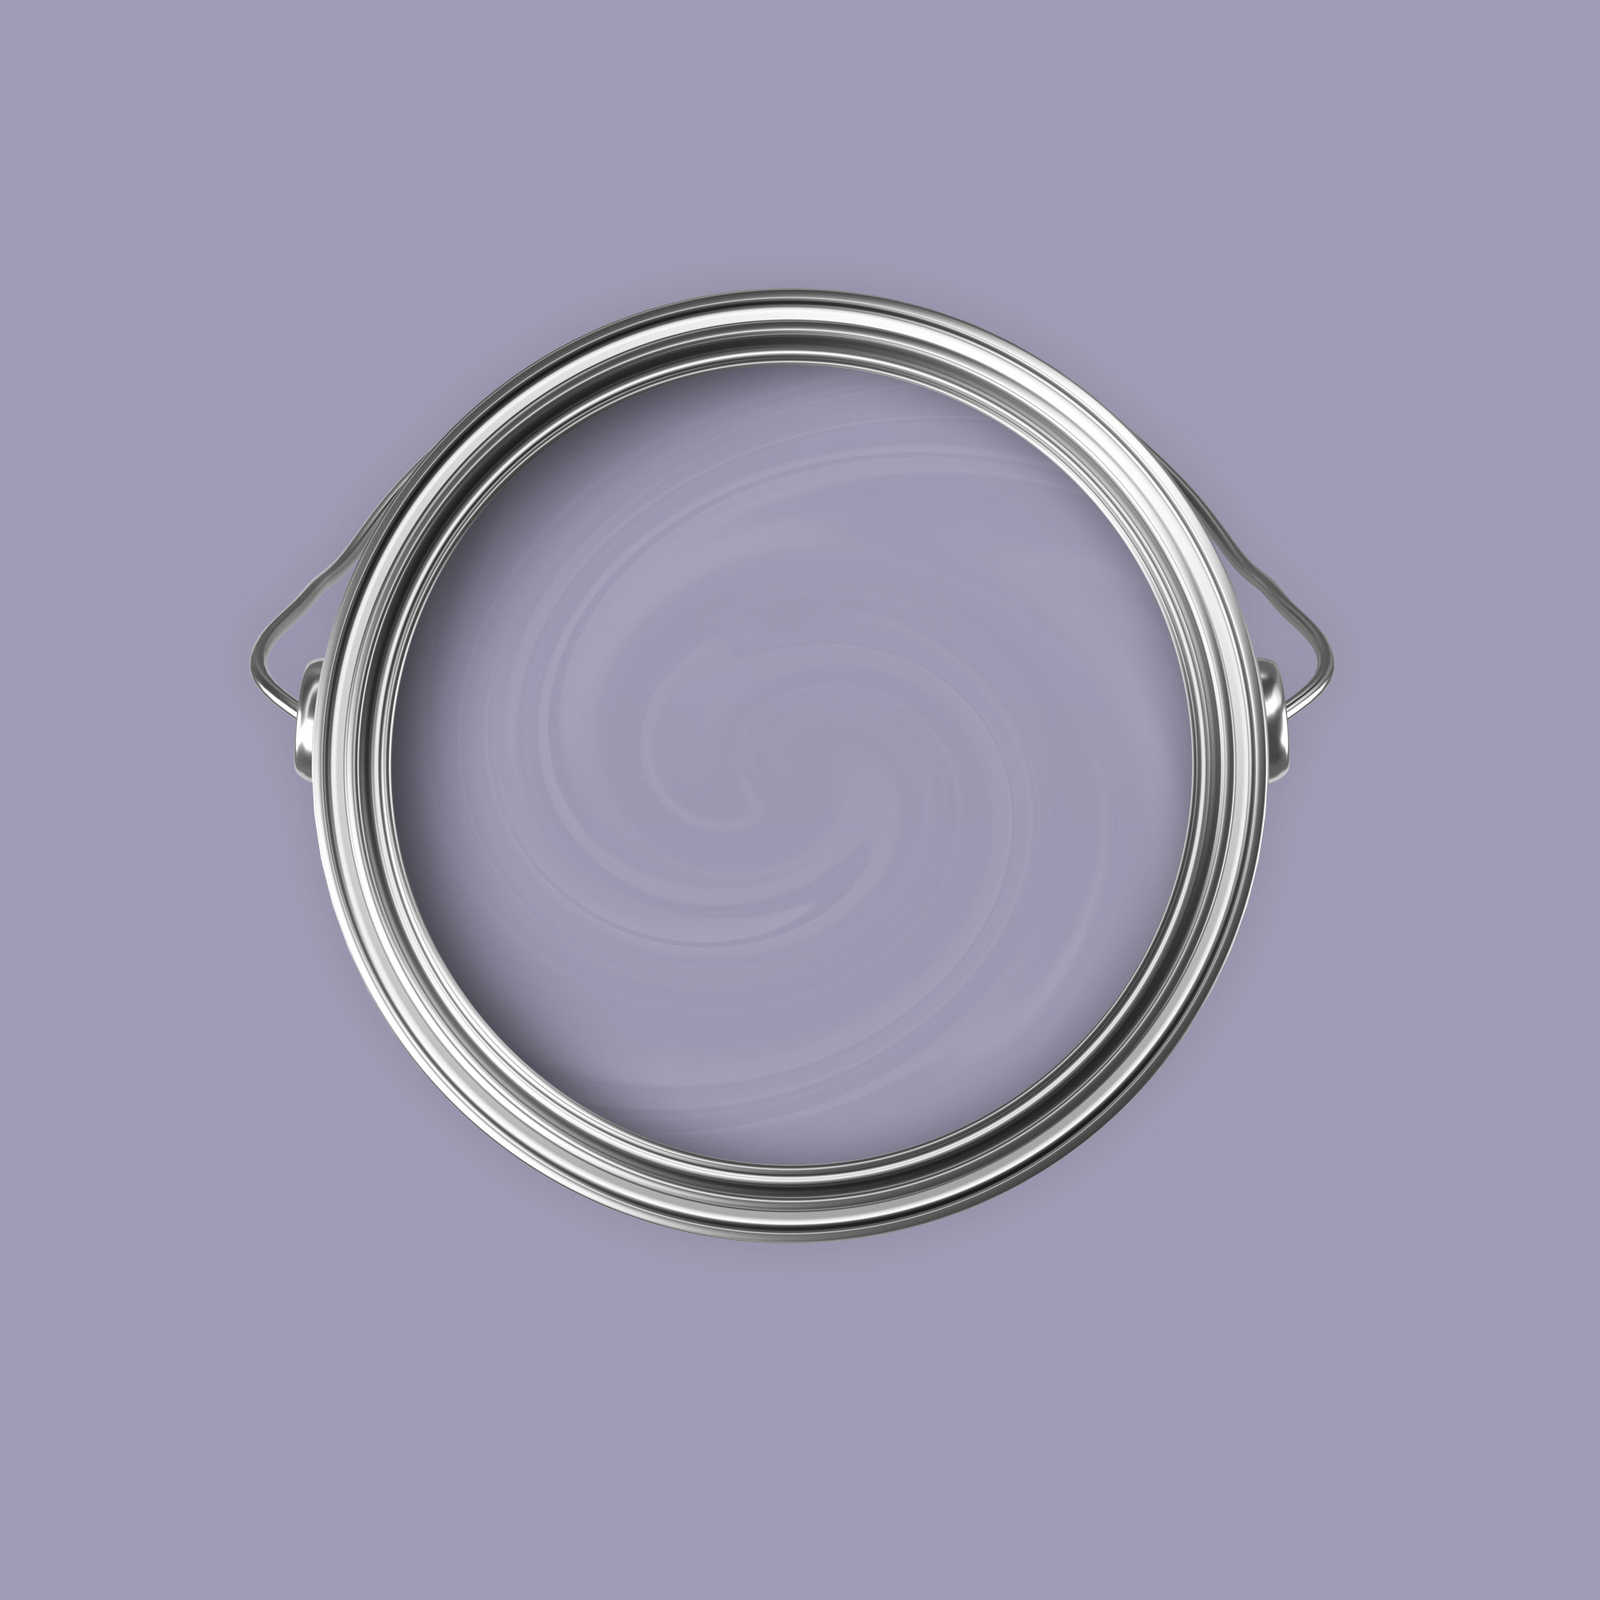             Premium Wall Paint sensitive lilac »Magical Mauve« NW204 – 5 litre
        